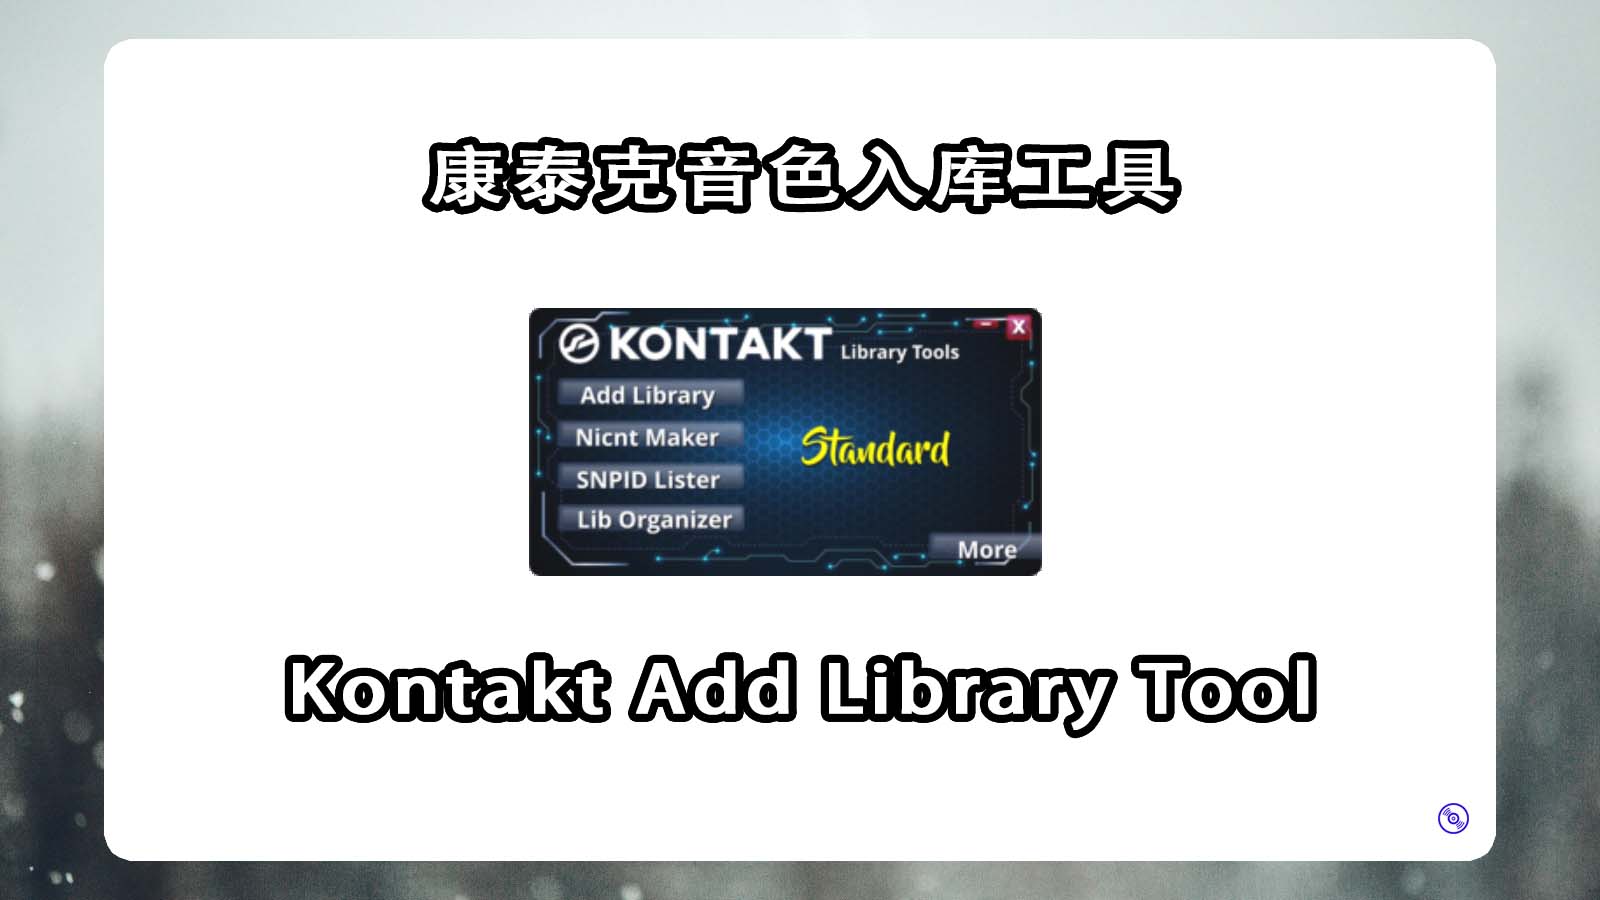 康泰克智能入库工具 Kontakt Library Tool V3